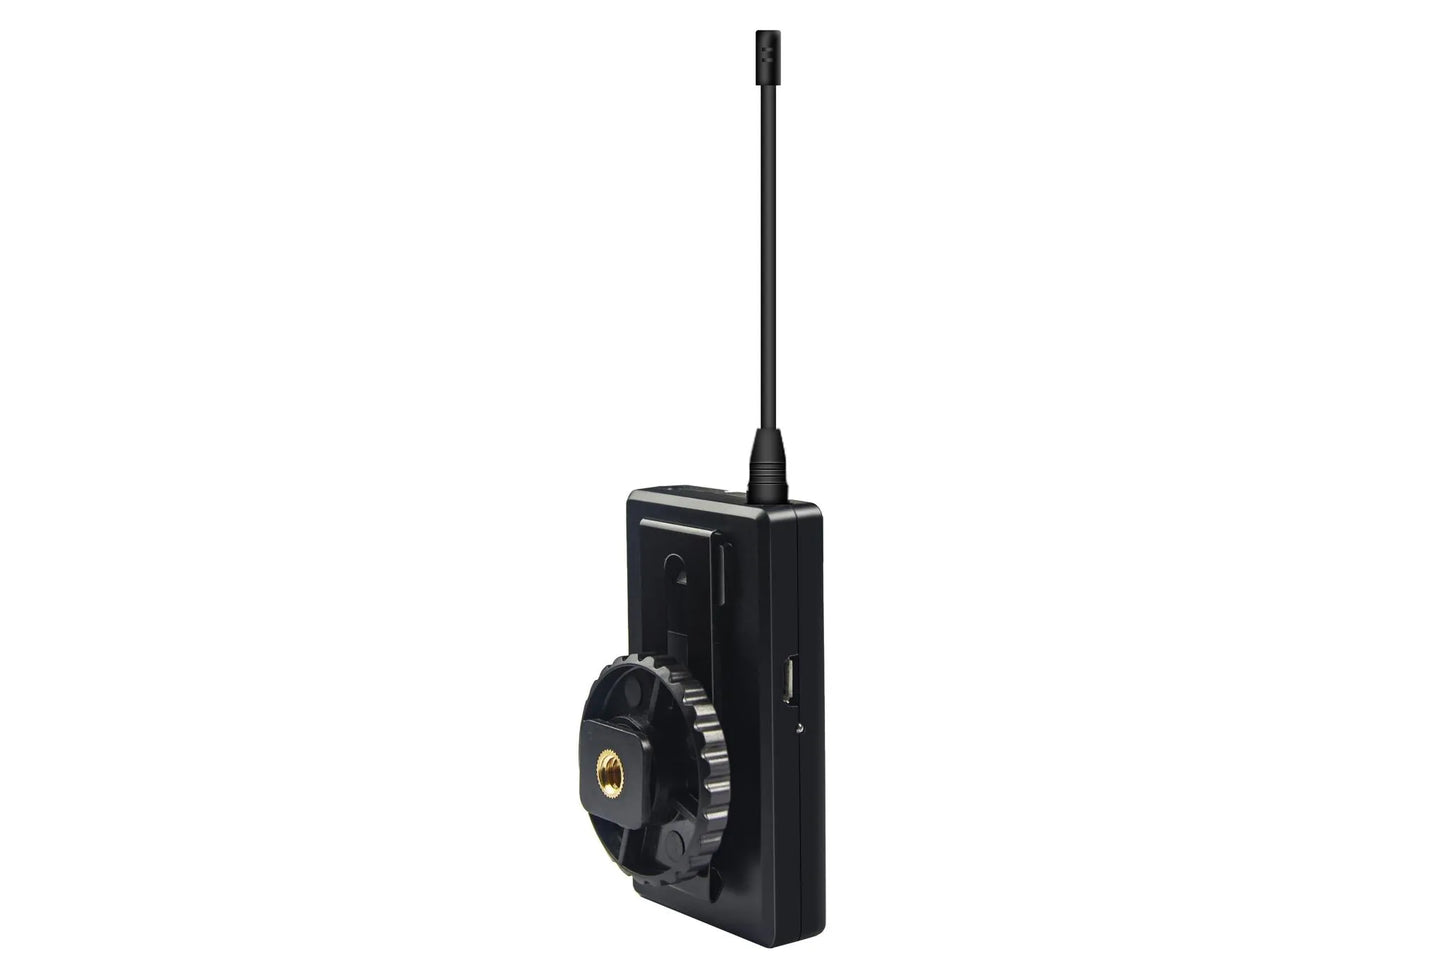 CKMOVA UM100 UHF Wireless Microphone Kit (Lightning Receiver) - ProSound